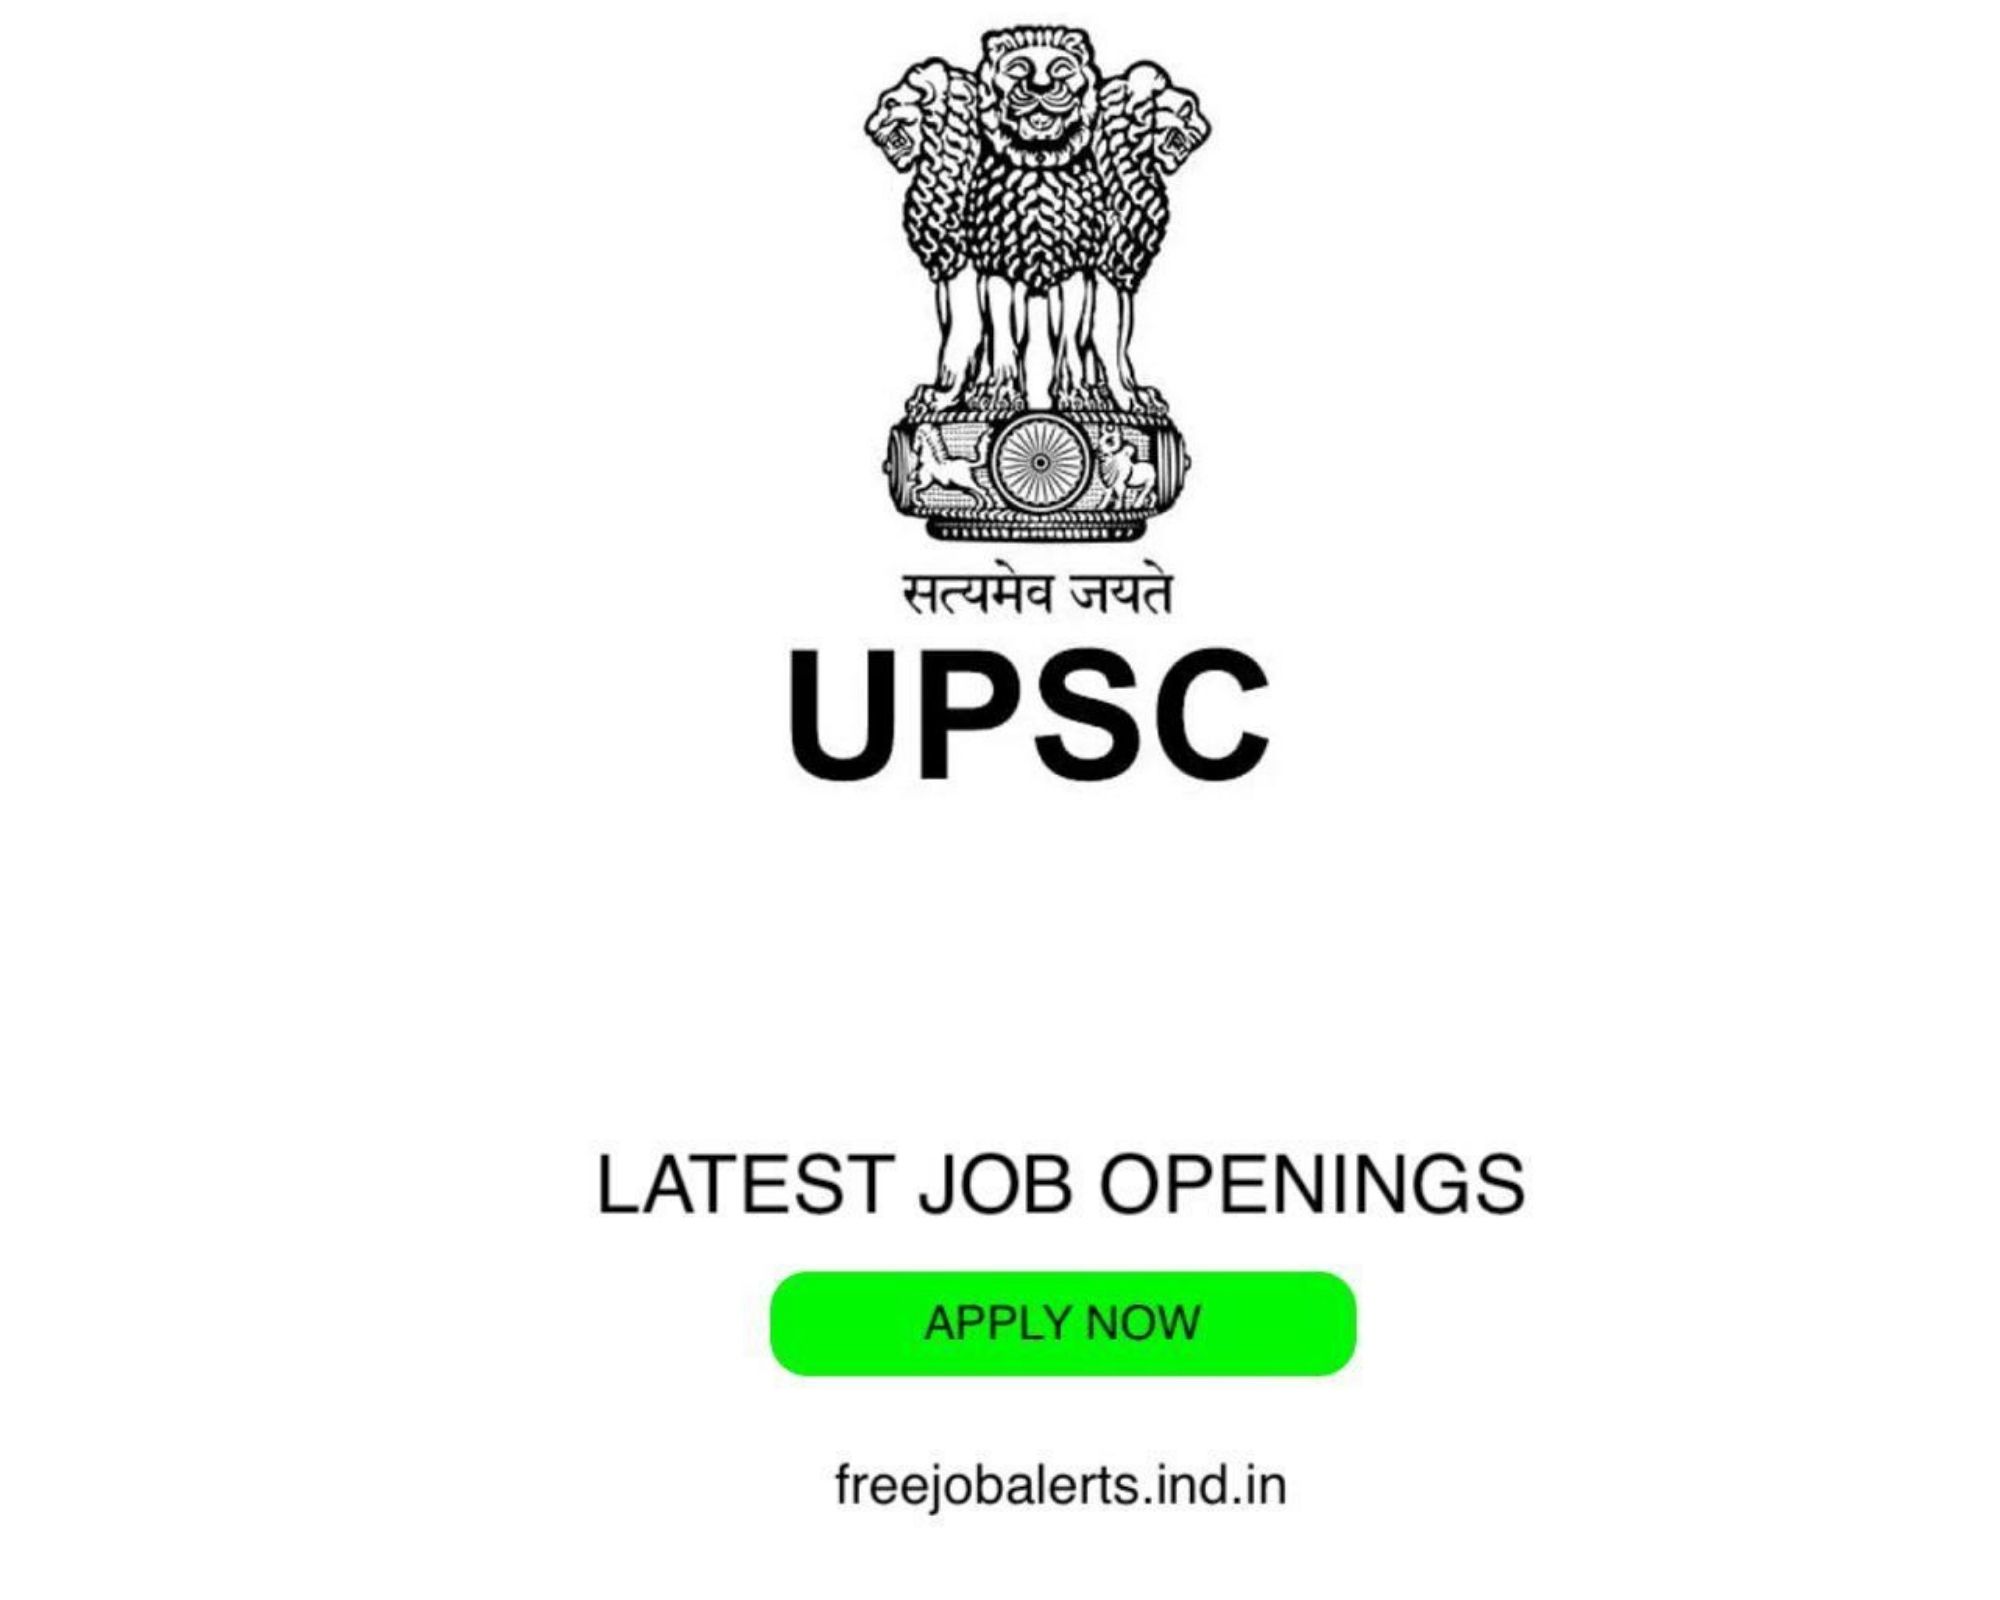 Latest Govt job openings - Free job alerts, Indian Govt Jobs